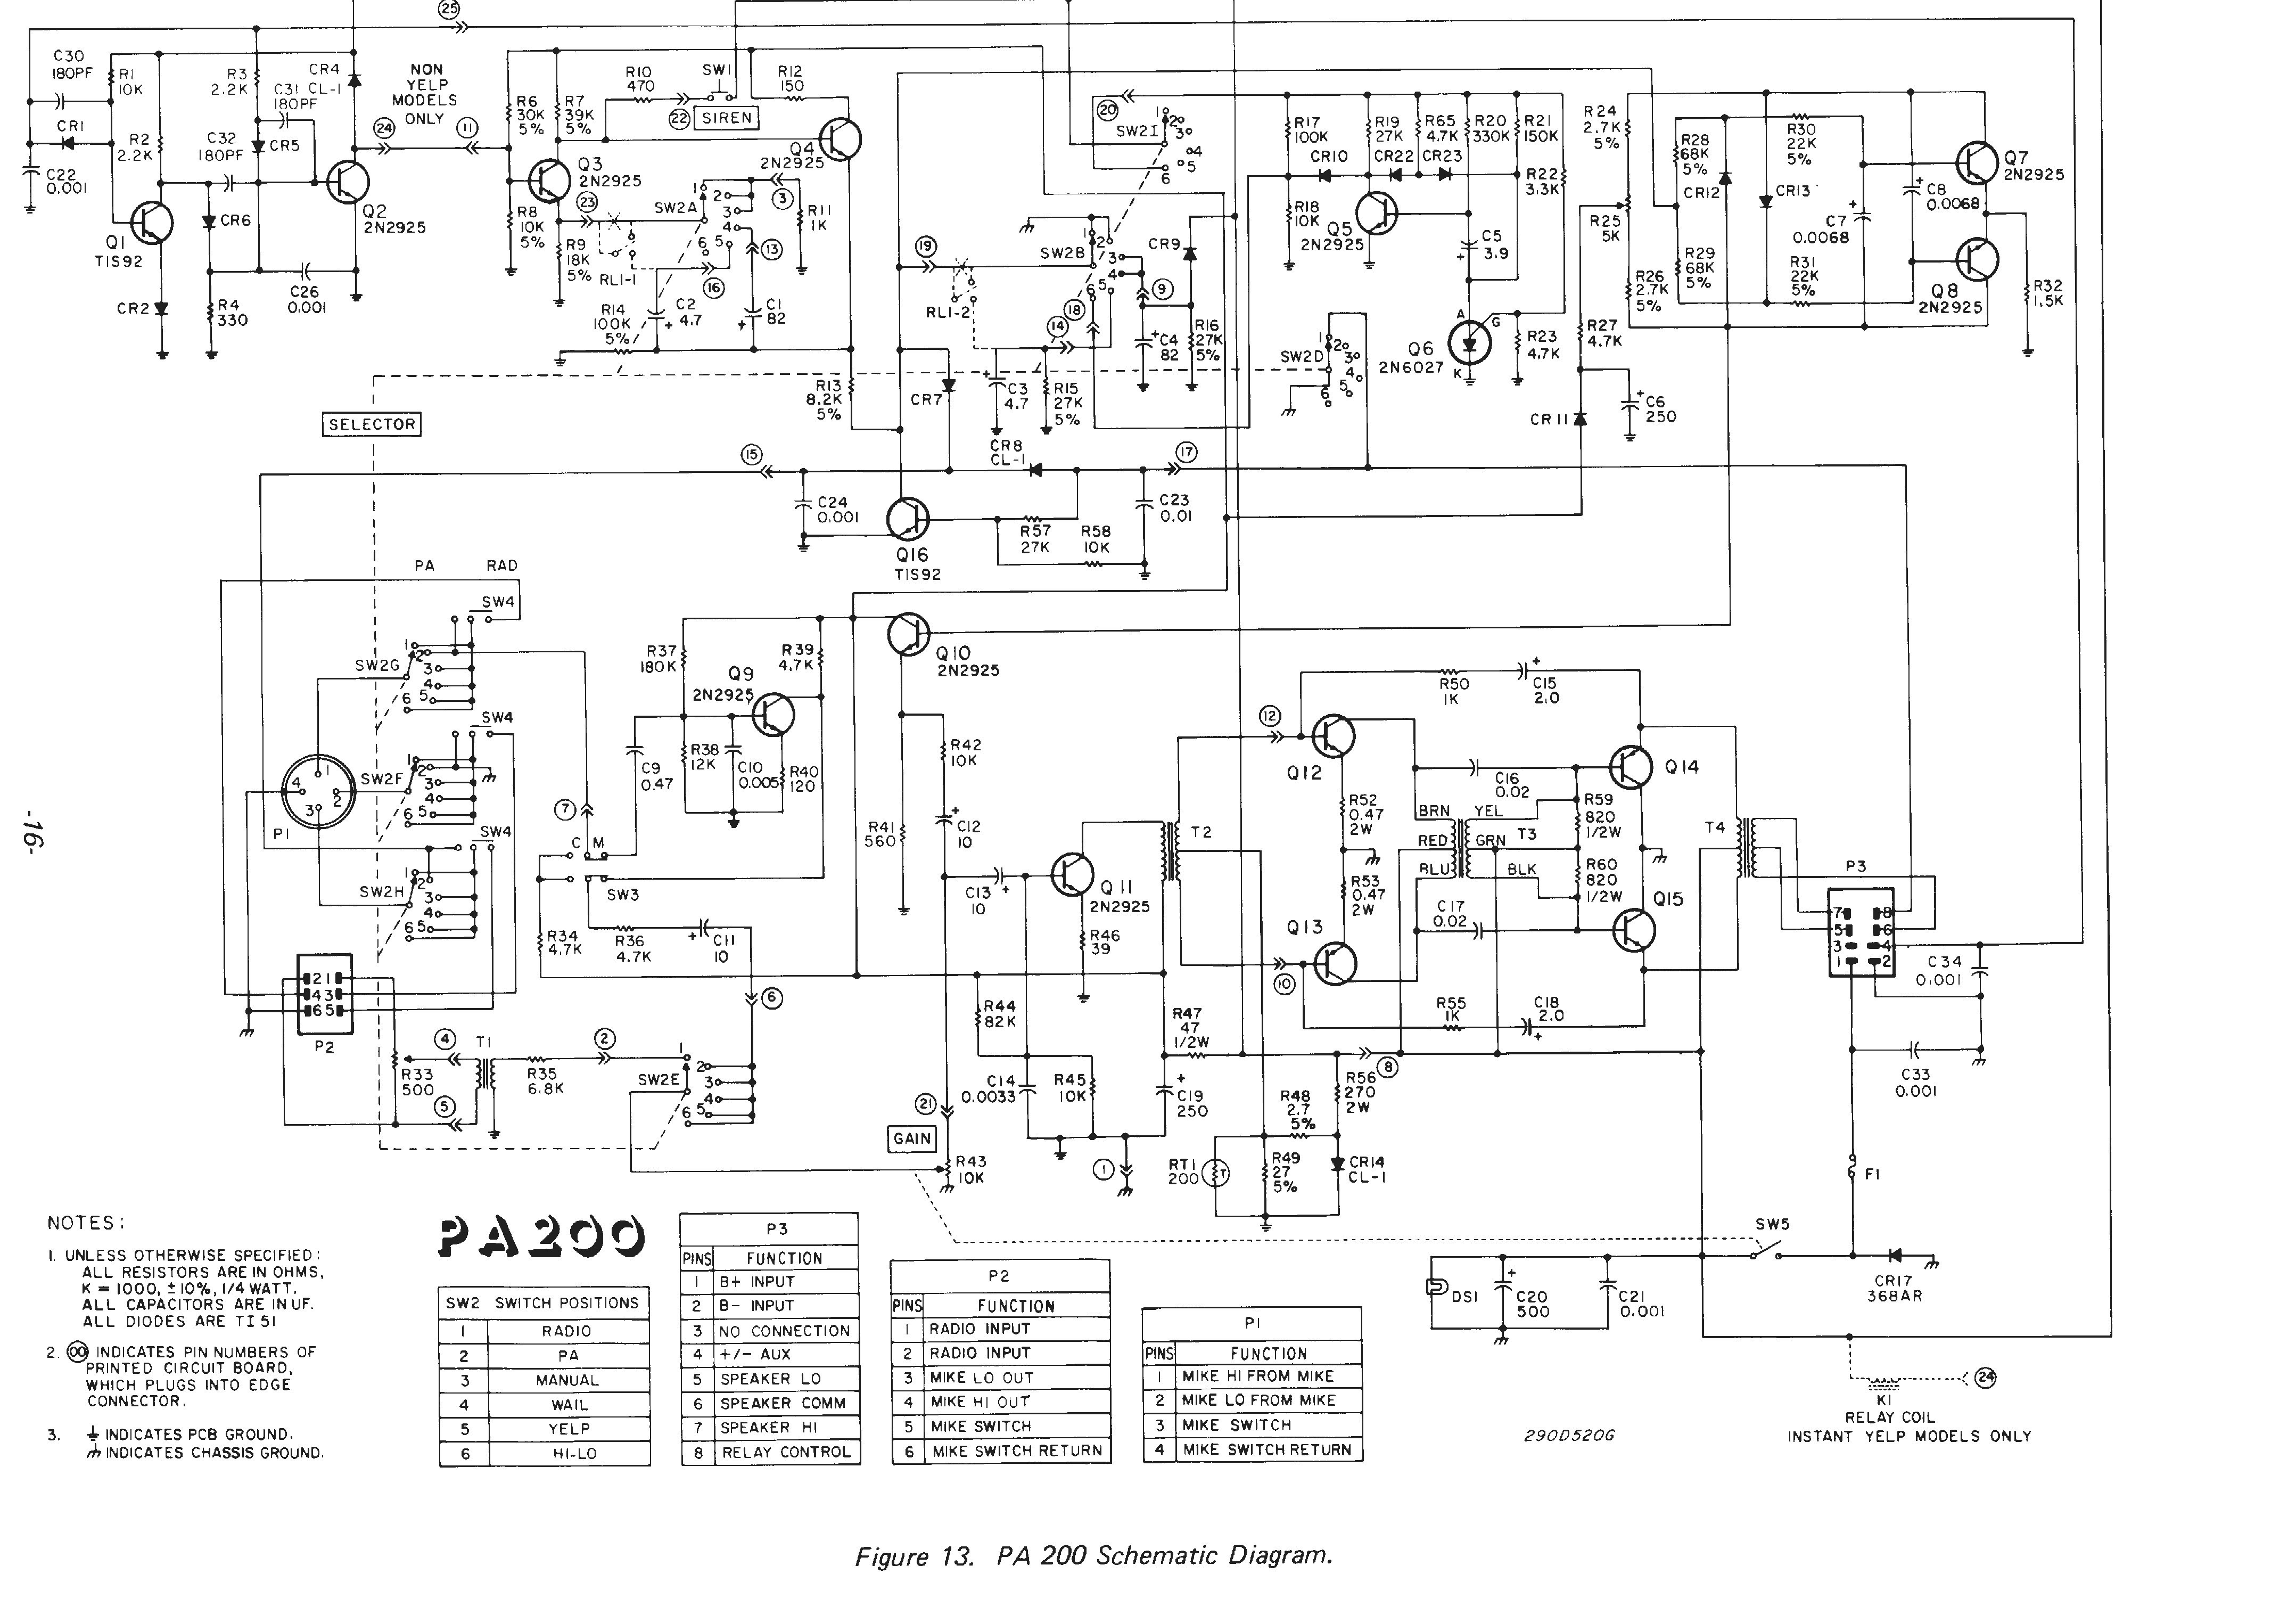 Federal Signal Pa300 Wiring Diagram - Callingallquestions - Federal Signal Pa300 Wiring Diagram